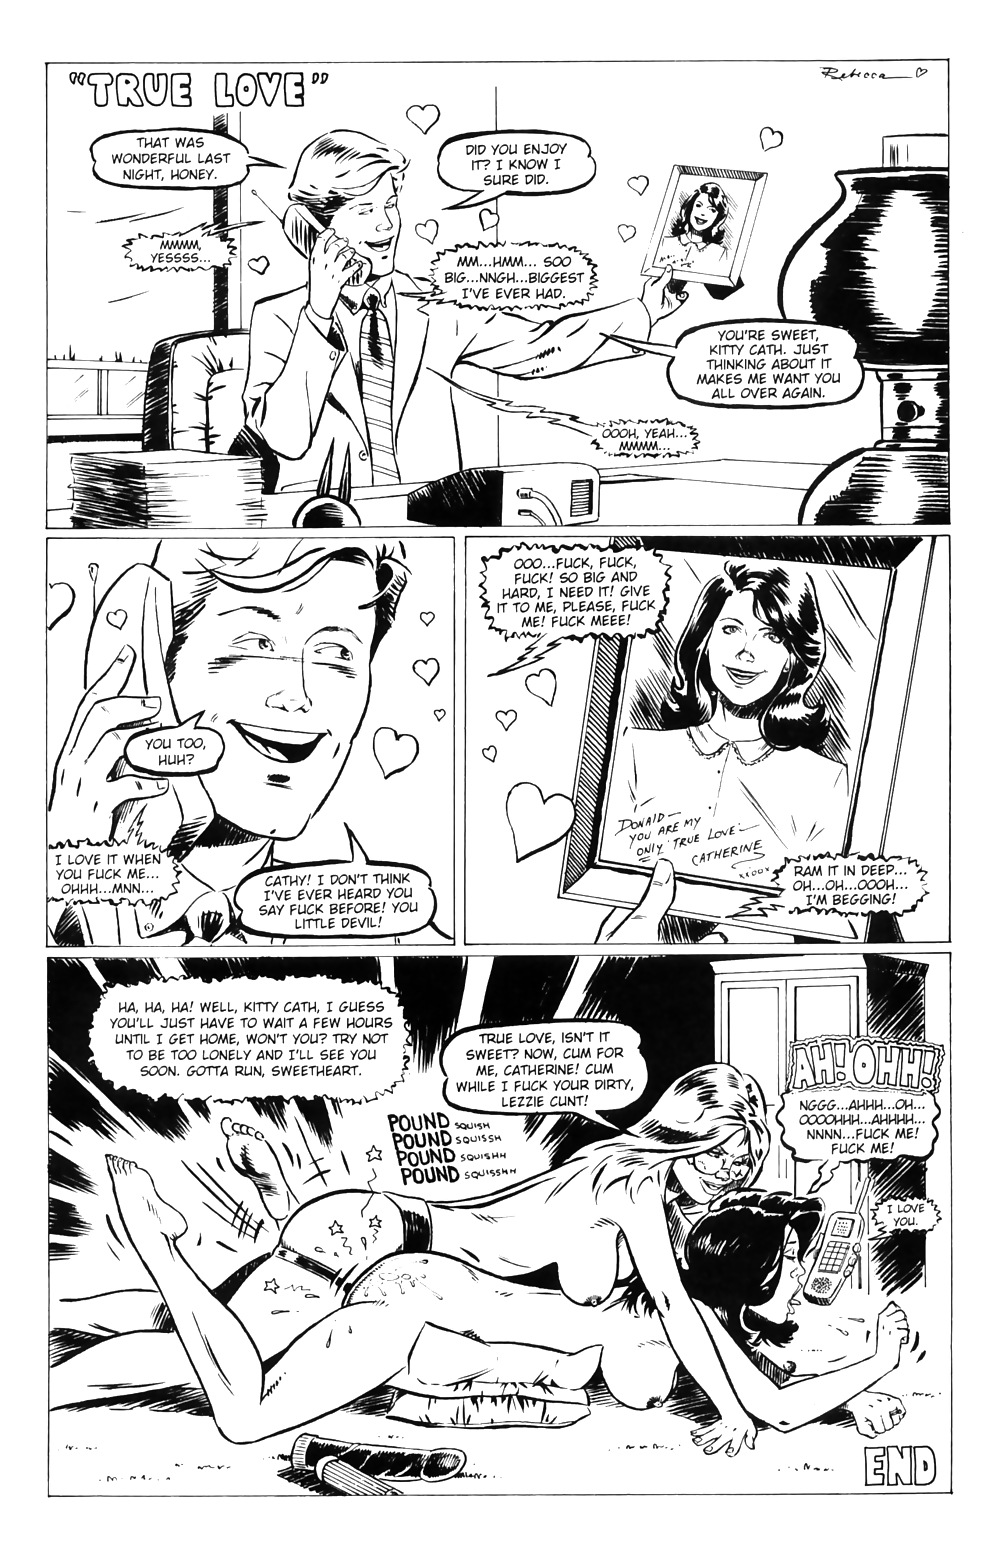 Hausfrauen Am Spiel # 01 - Eros-Comics Von Rebecca - April 2002 #36196558